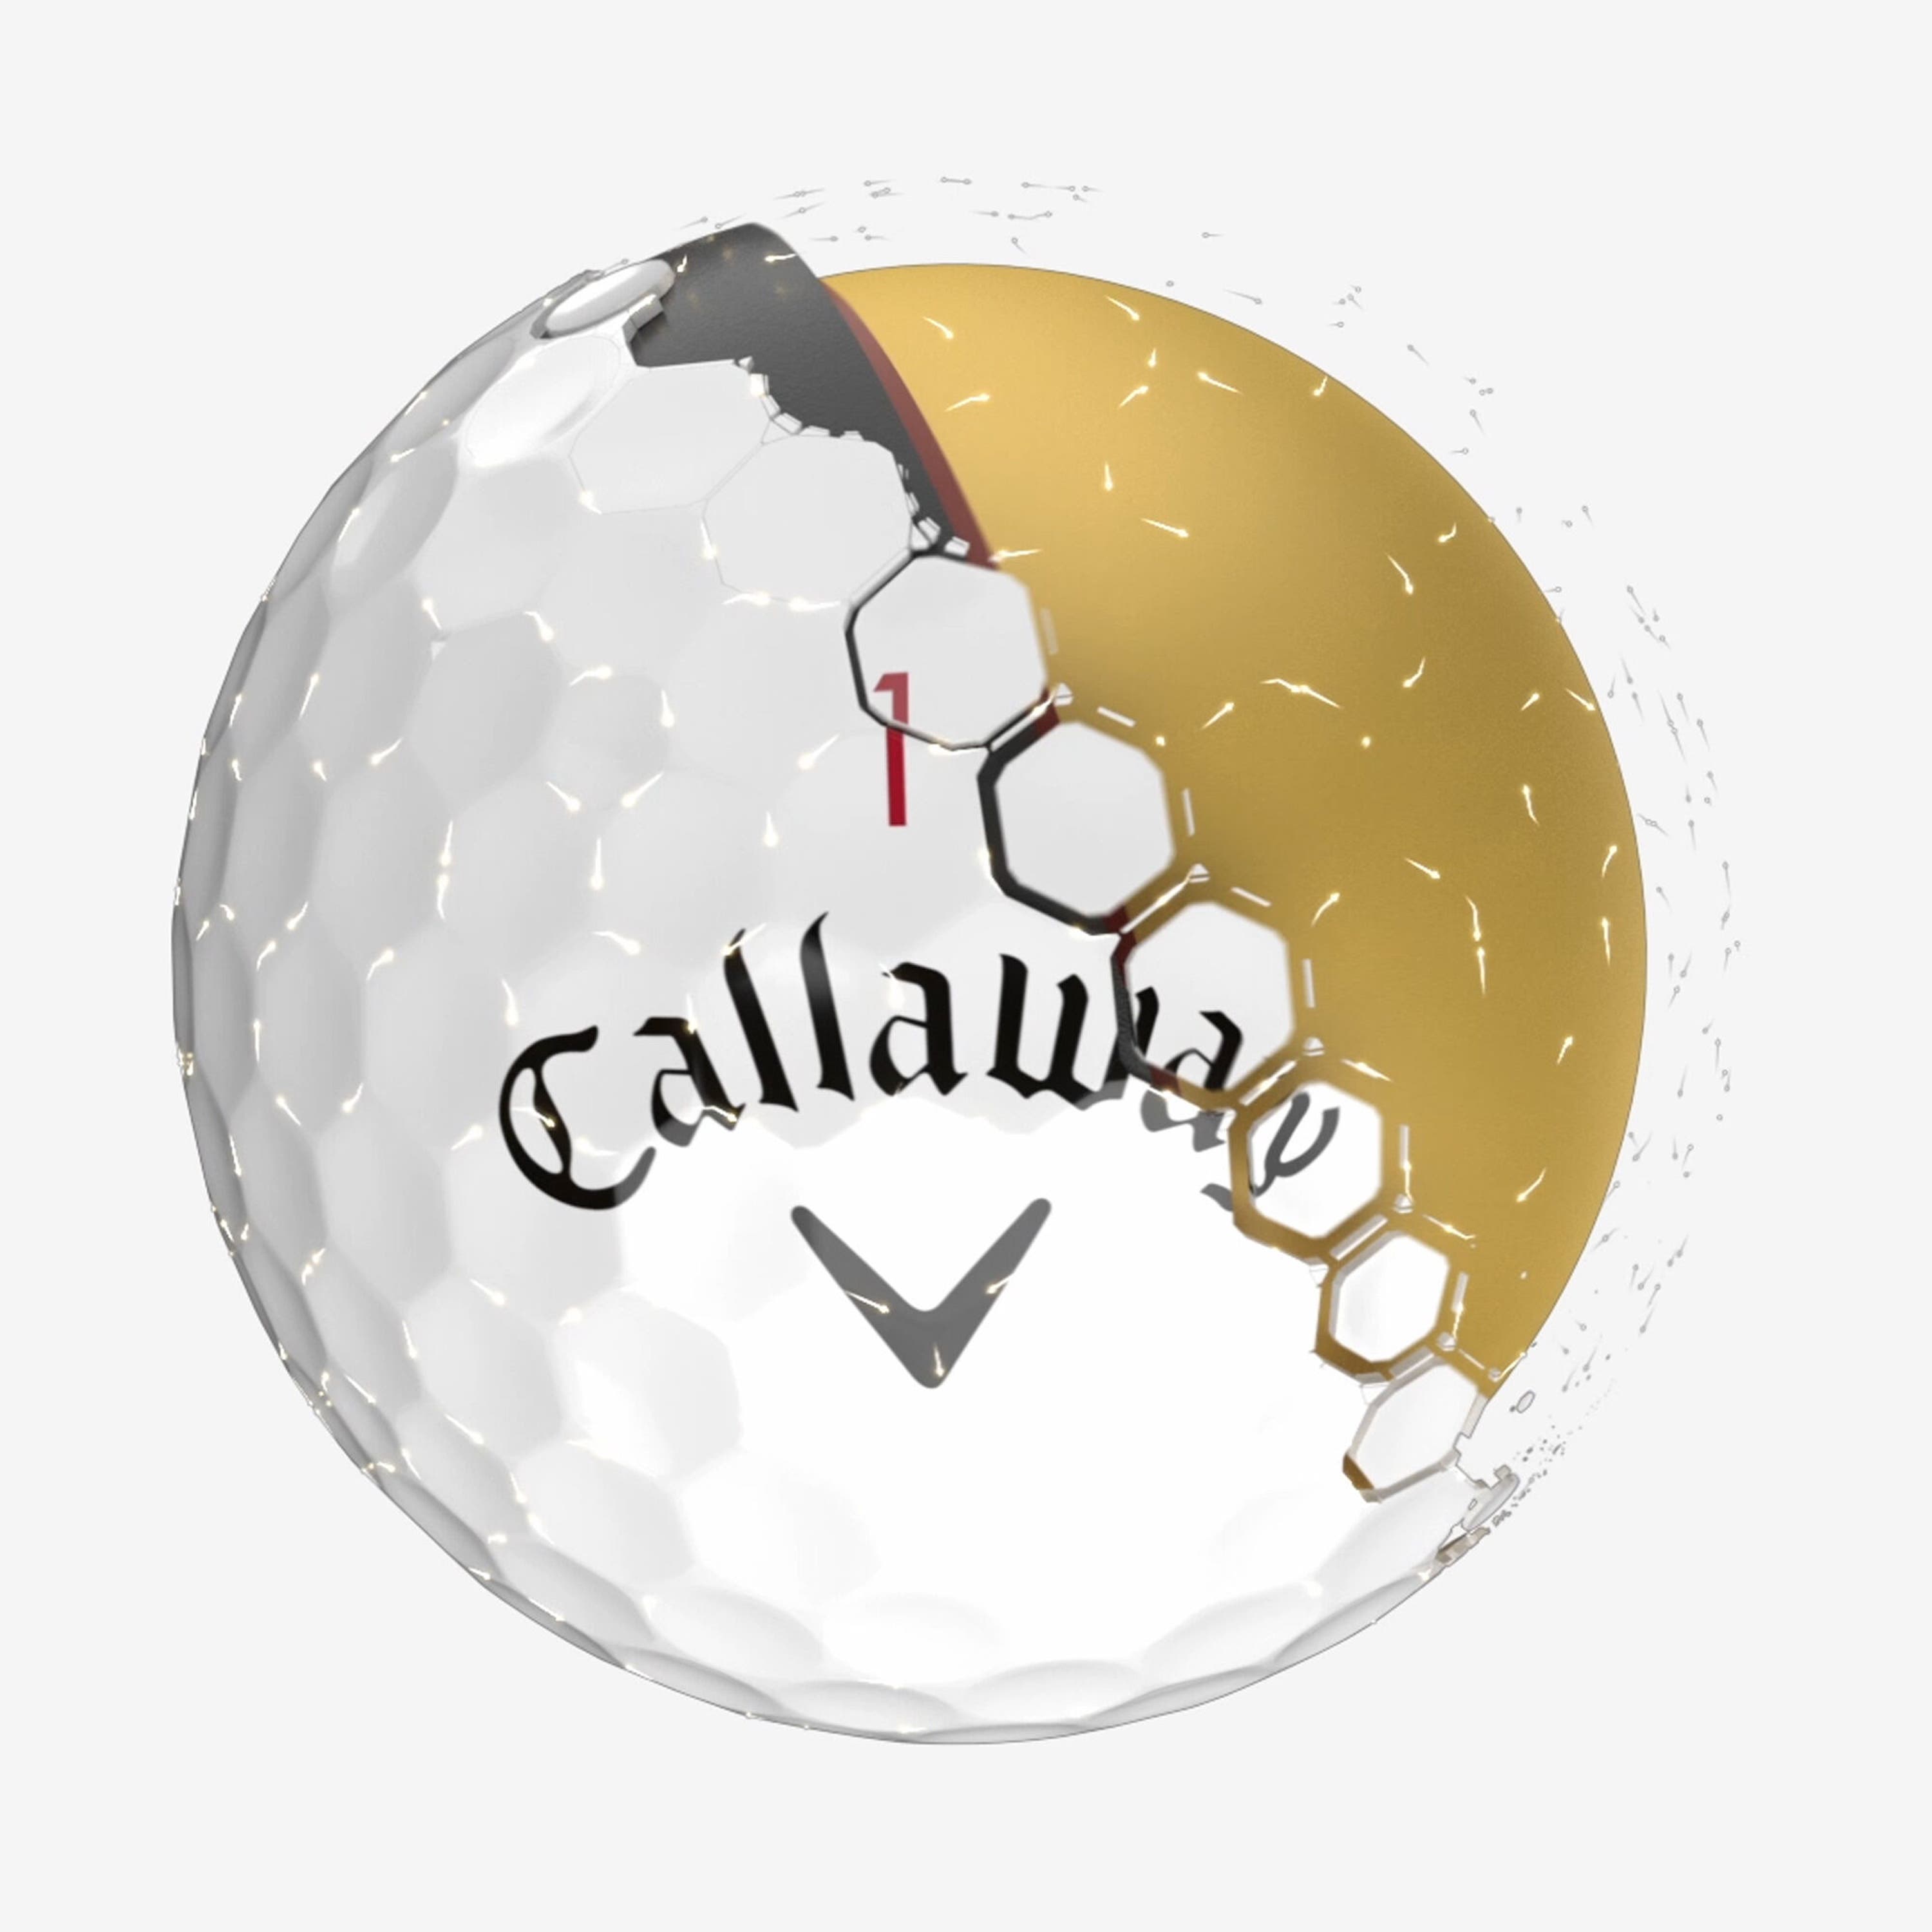 Chrome Tour - The New Gold Standard for Golf Balls